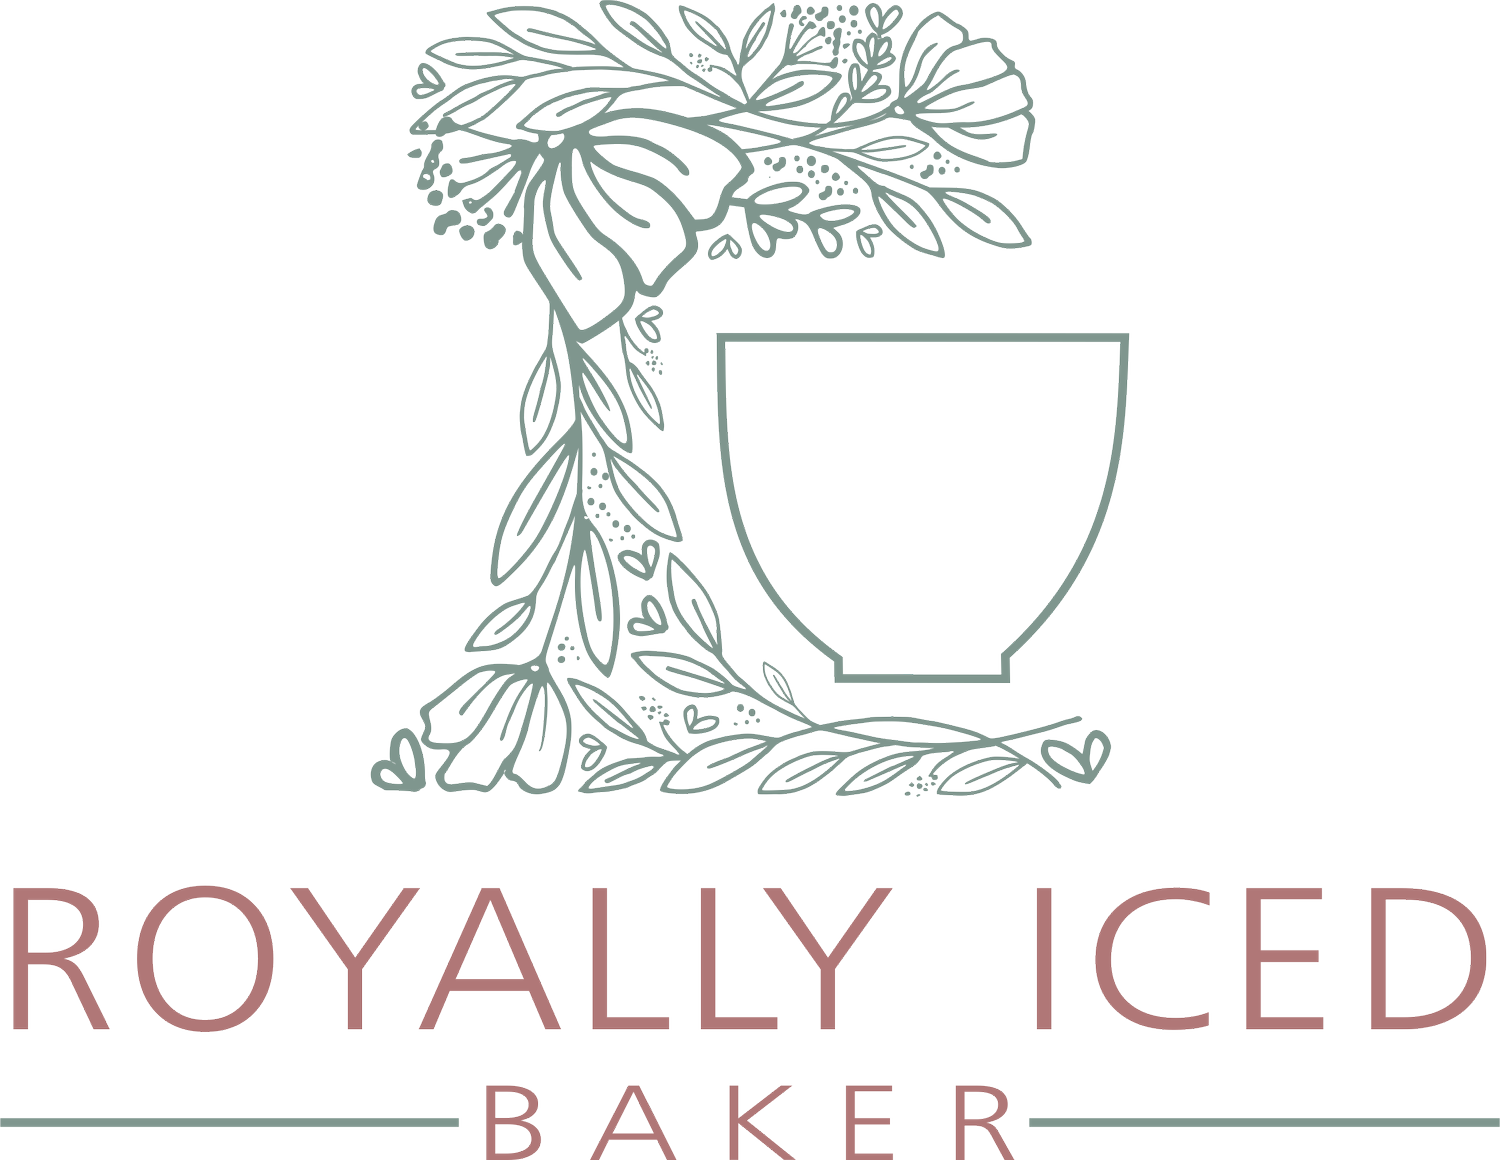 Royally Iced Baker